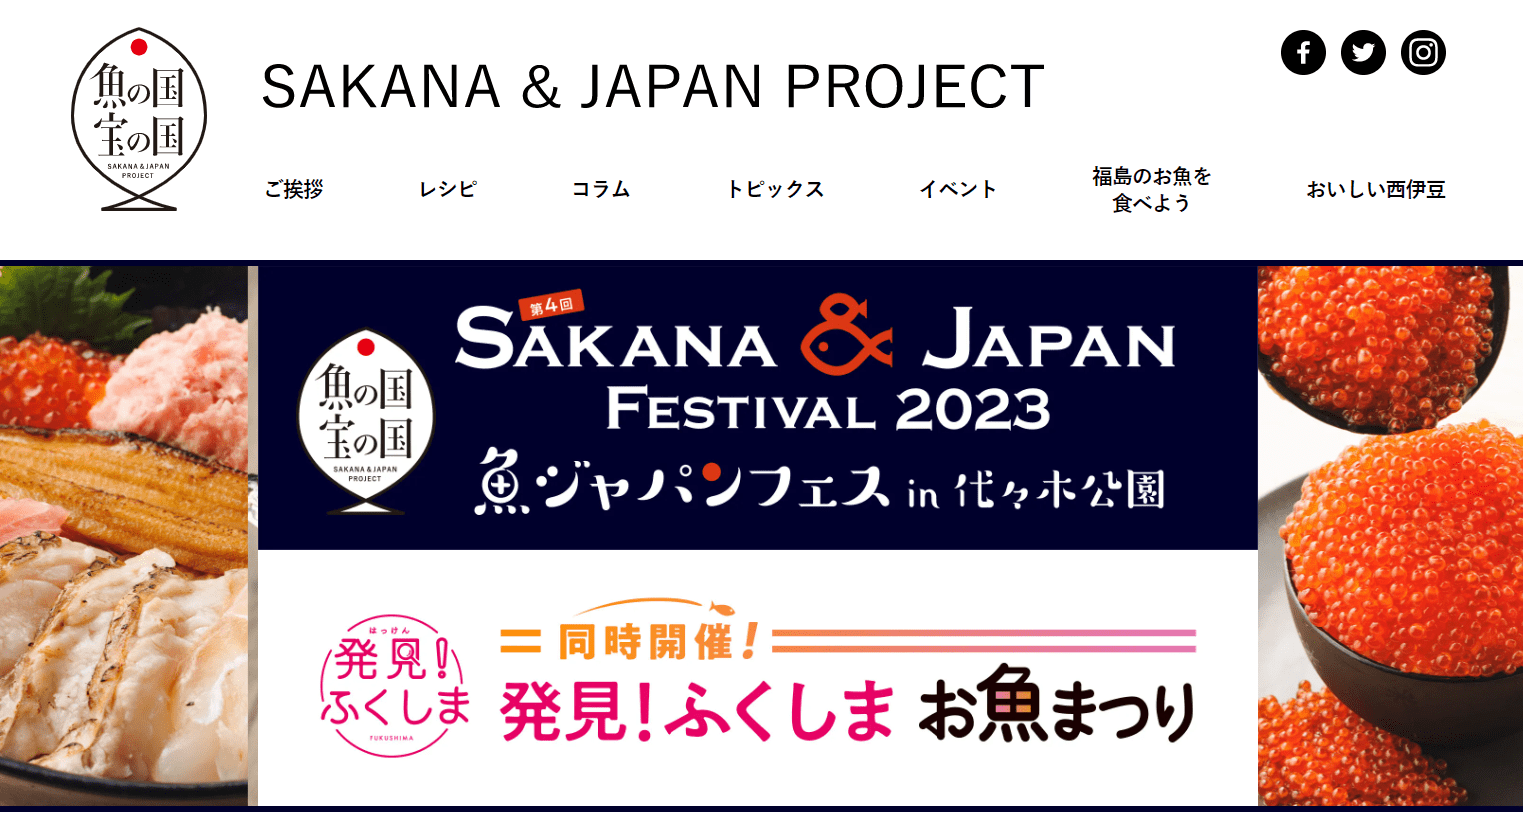 Sakana and Japan Festival